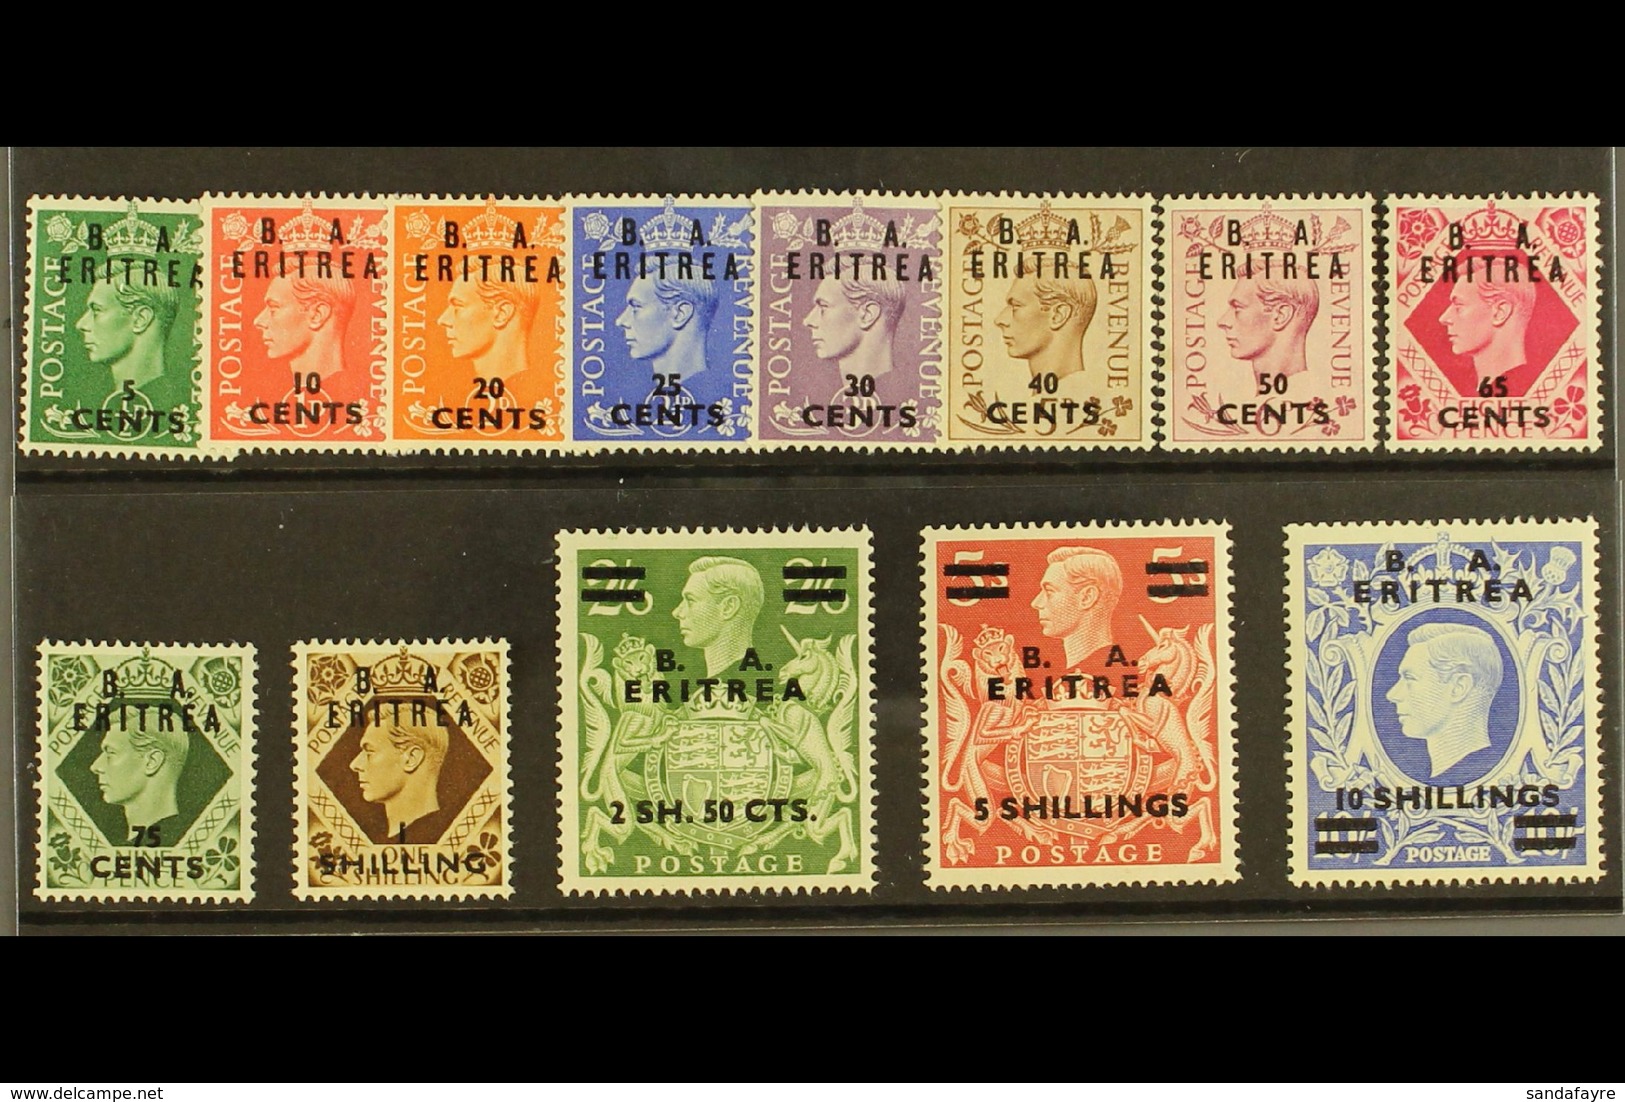 ERITREA  1950 "B. A. ERITREA" Complete Set, SG E13/25, Very Fine Mint, Most (including Top Three Values) Never Hinged. ( - Afrique Orientale Italienne